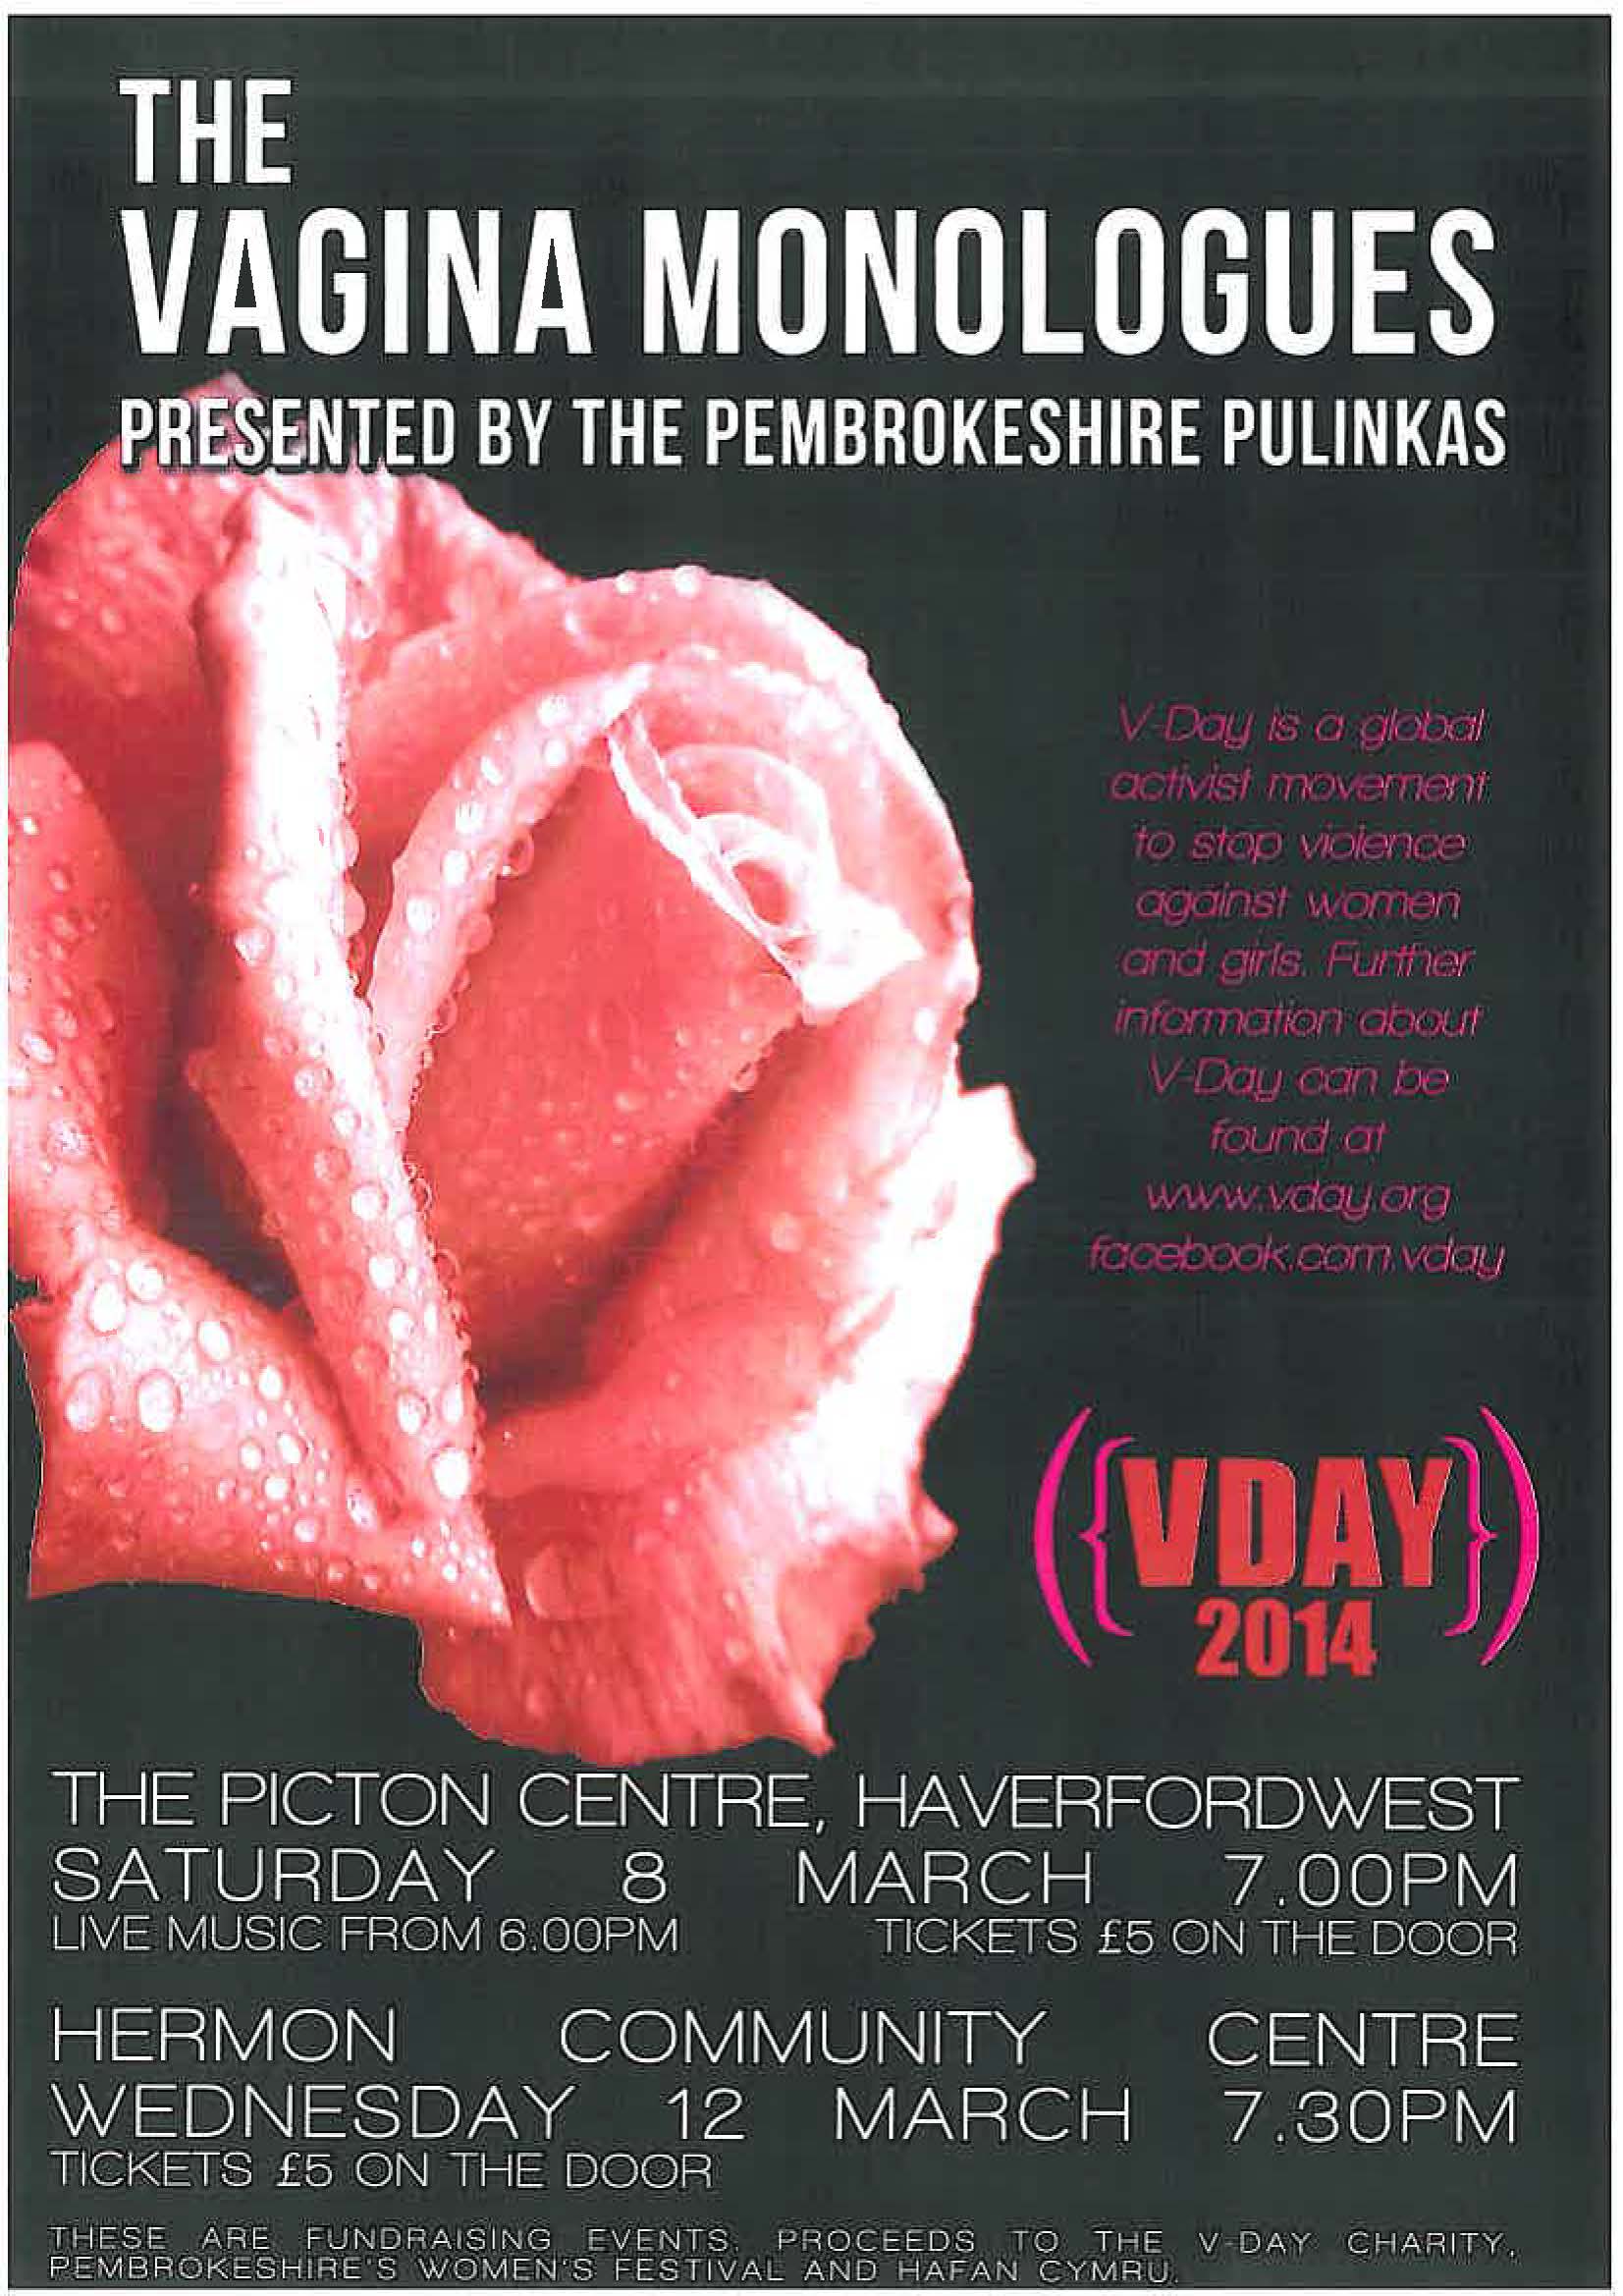 Vagina Monologues, Canolfan Hermon, Pembrokeshire Pulinkas